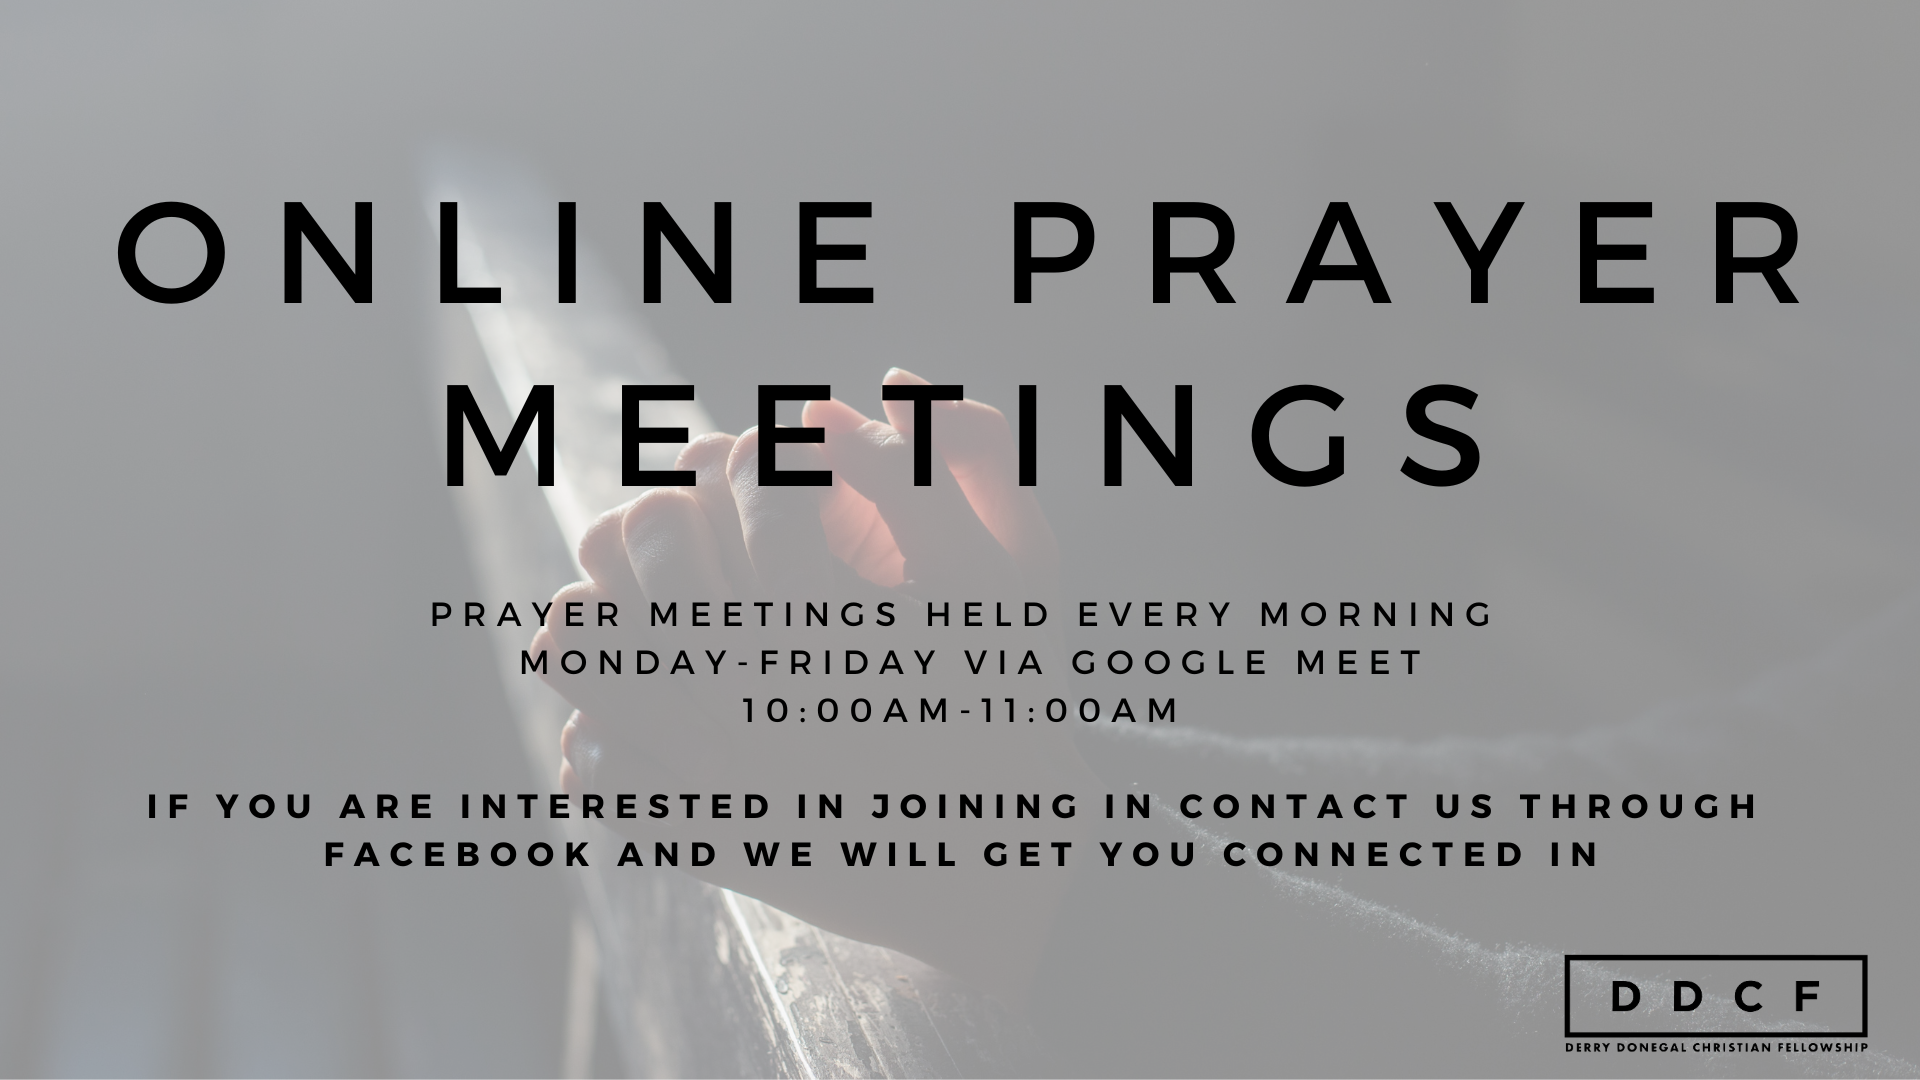 Online prayer meeting.png